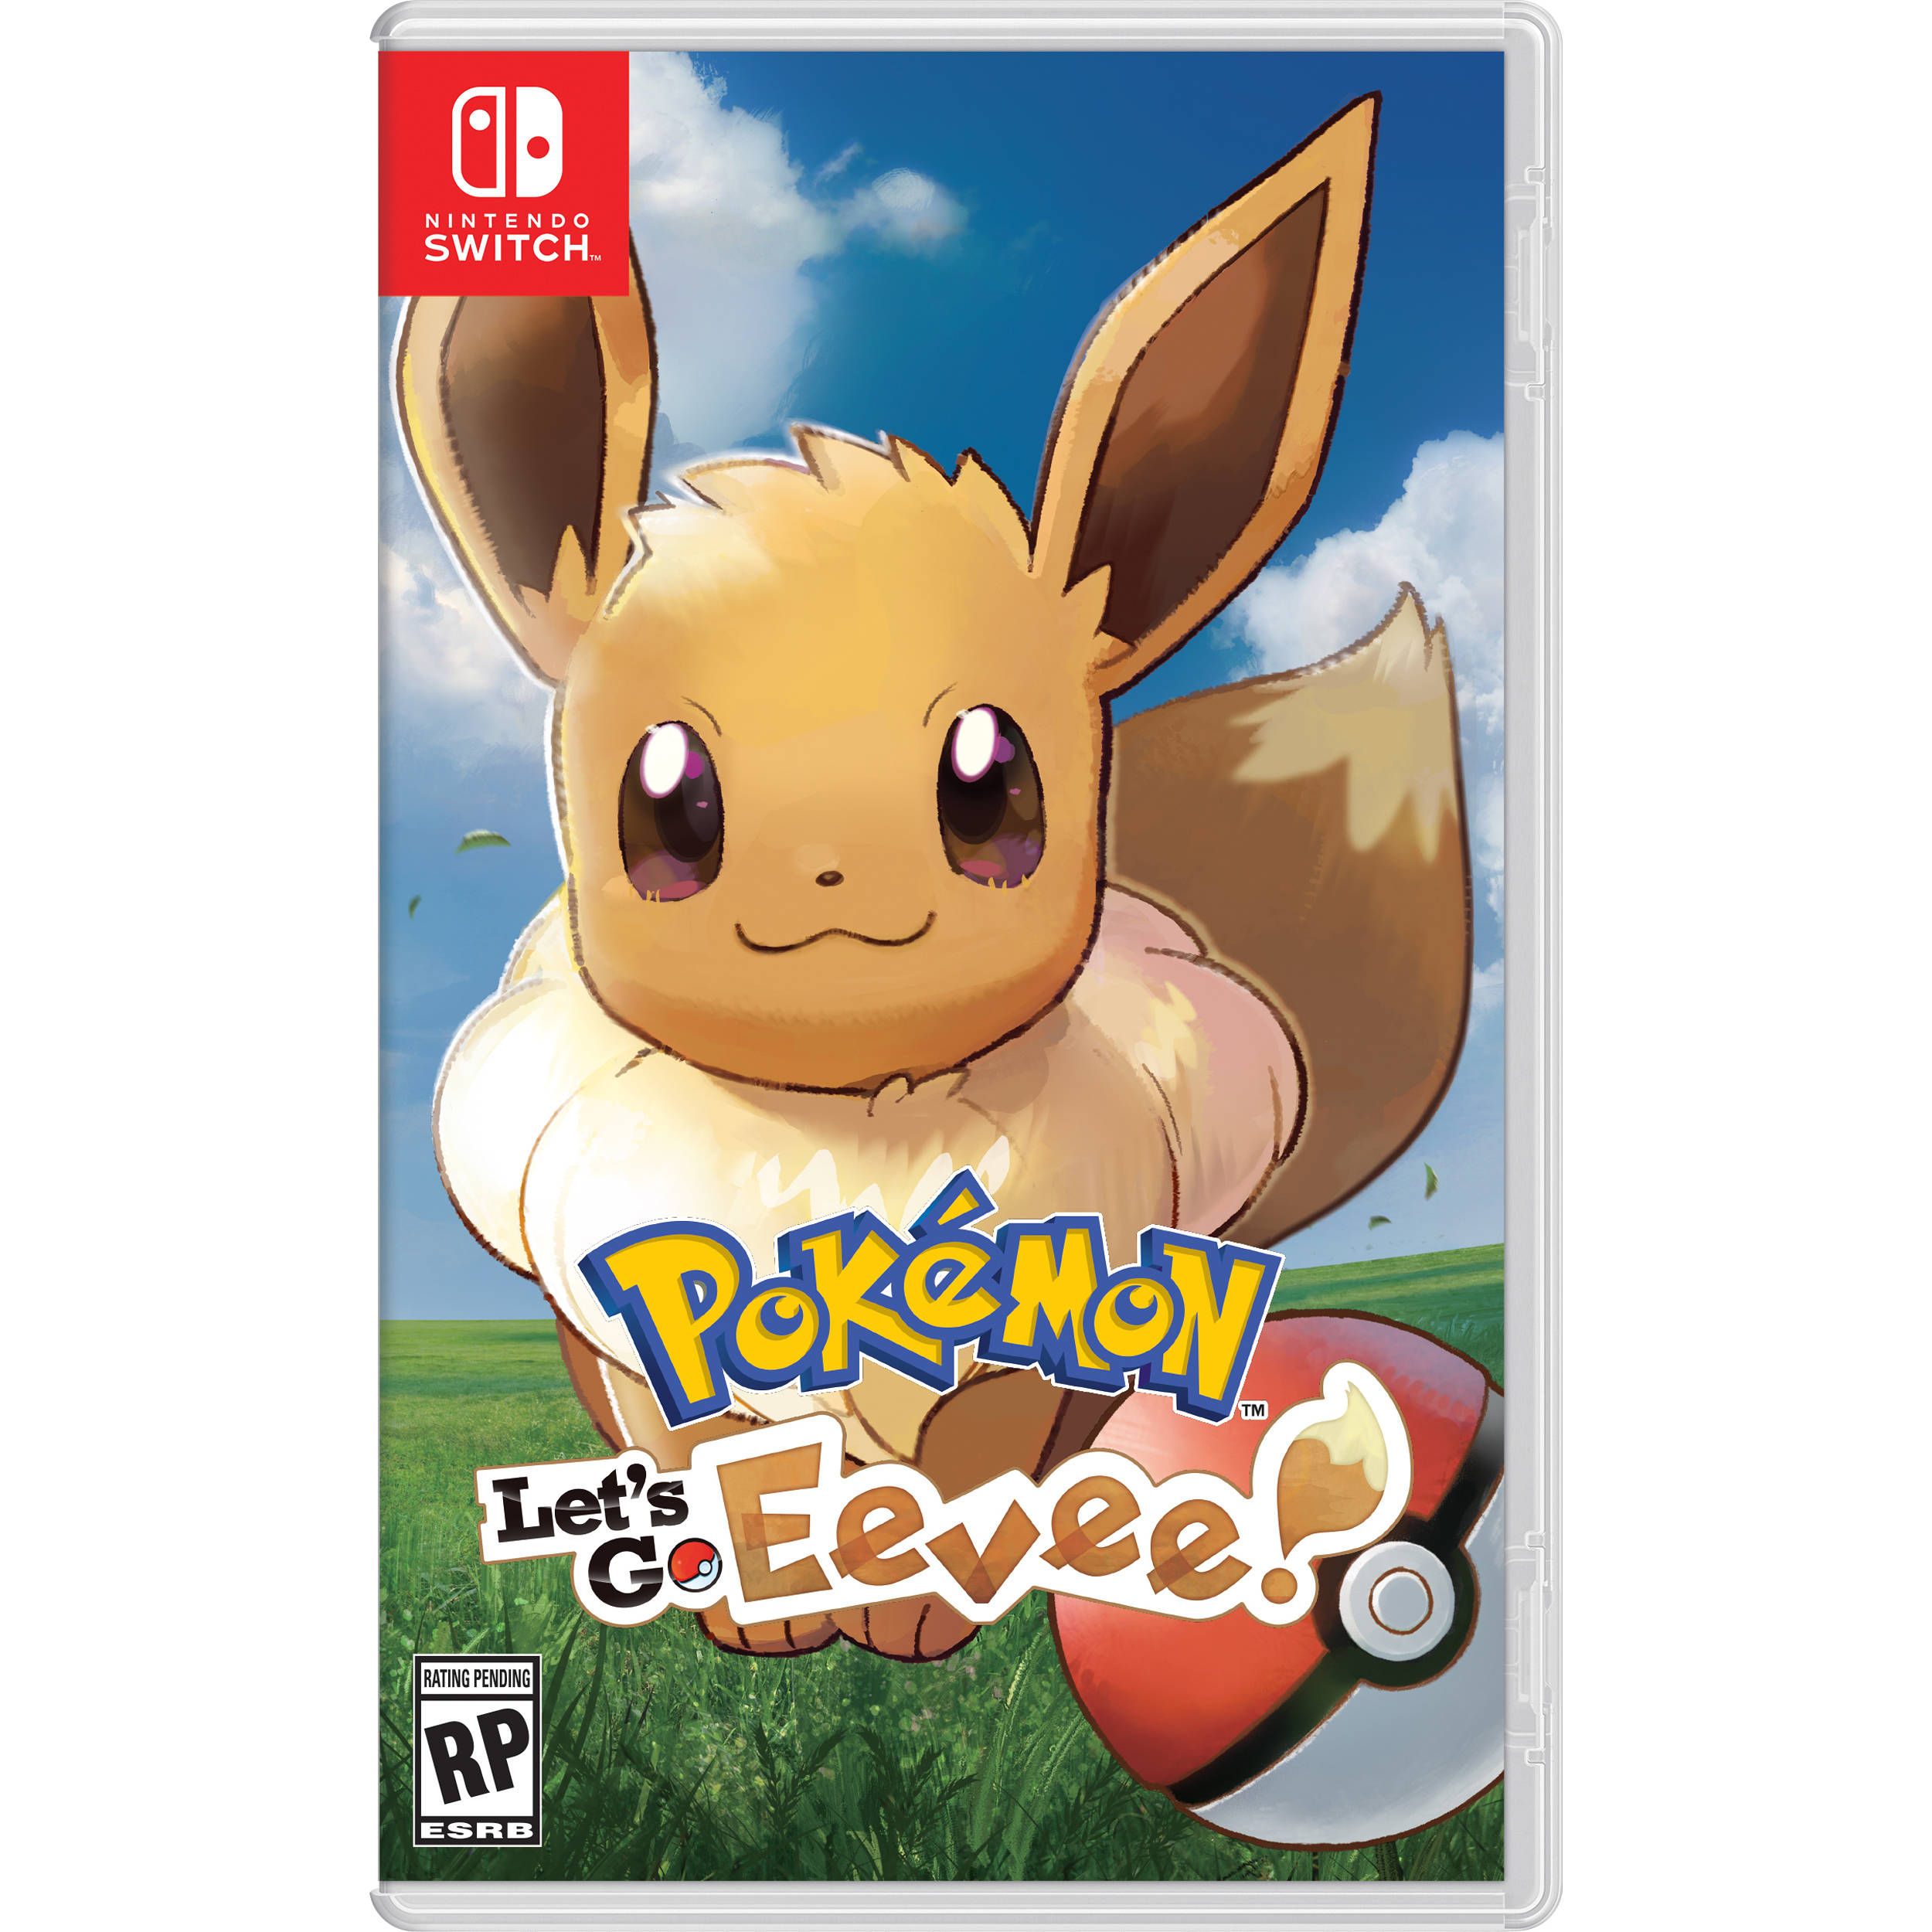 Nintendo Pokémon: Let's Go, Eevee 